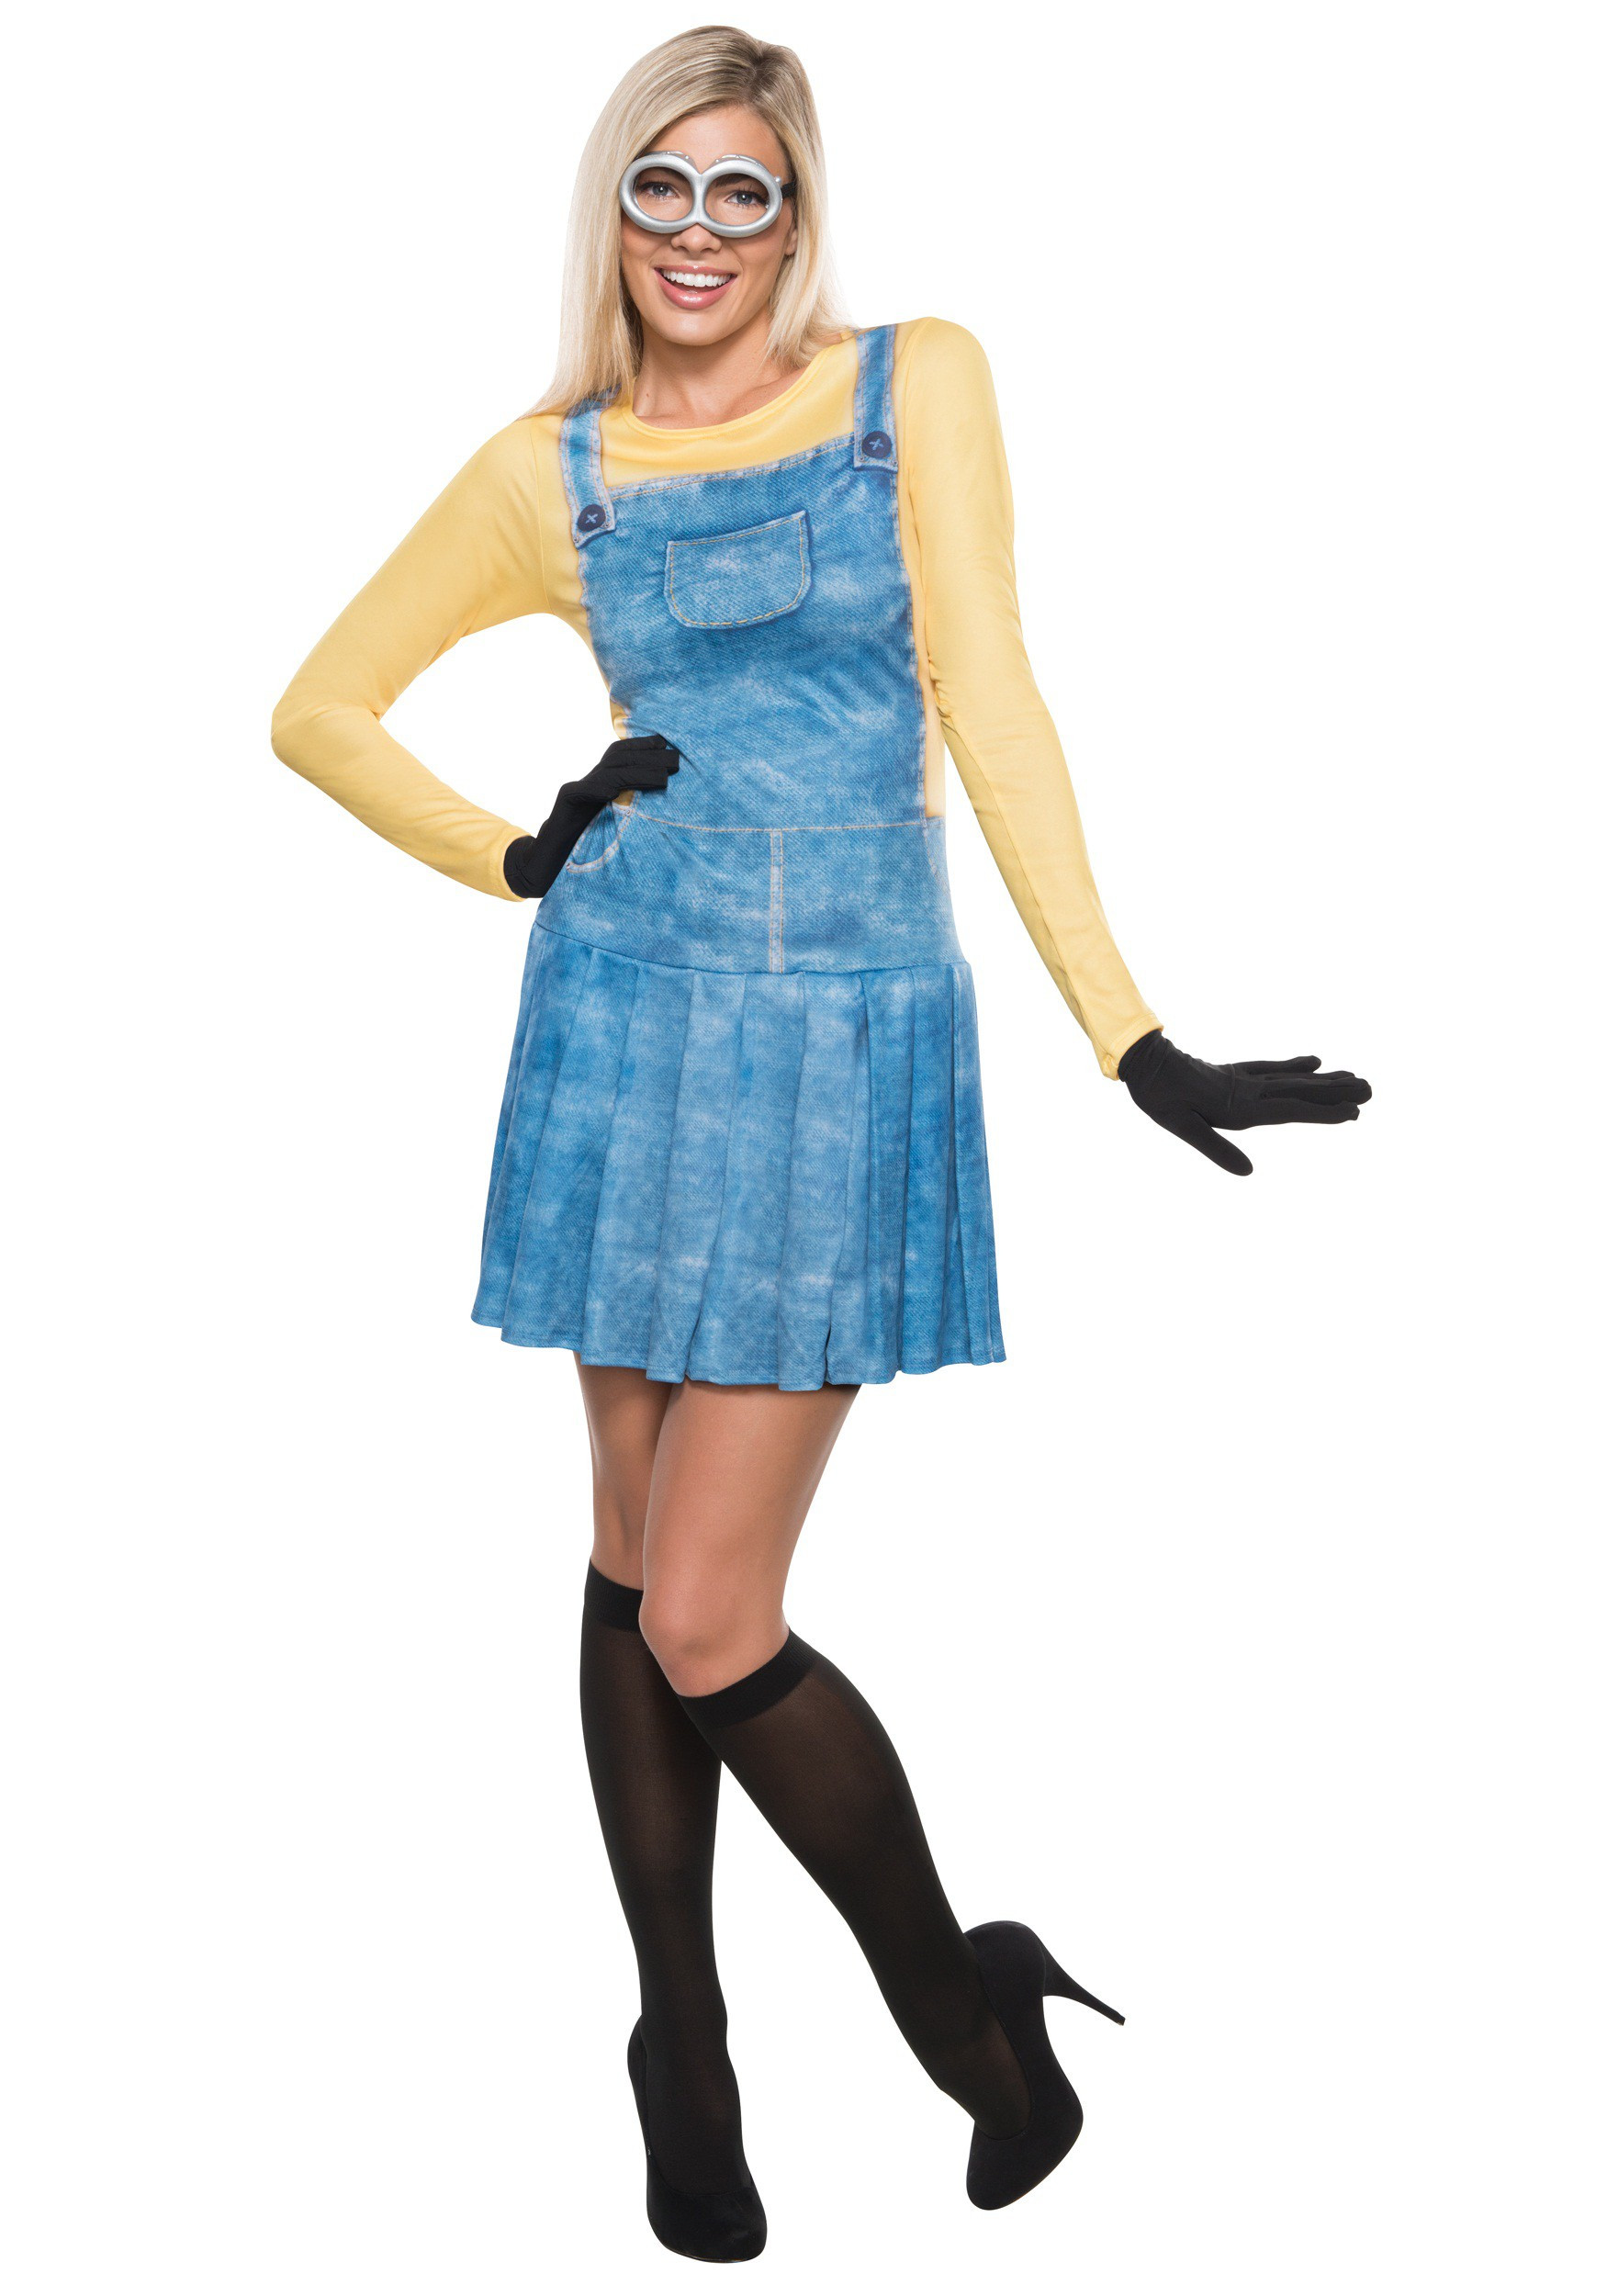 DIY Adult Halloween Costumes
 Adult Women s Minion Costume